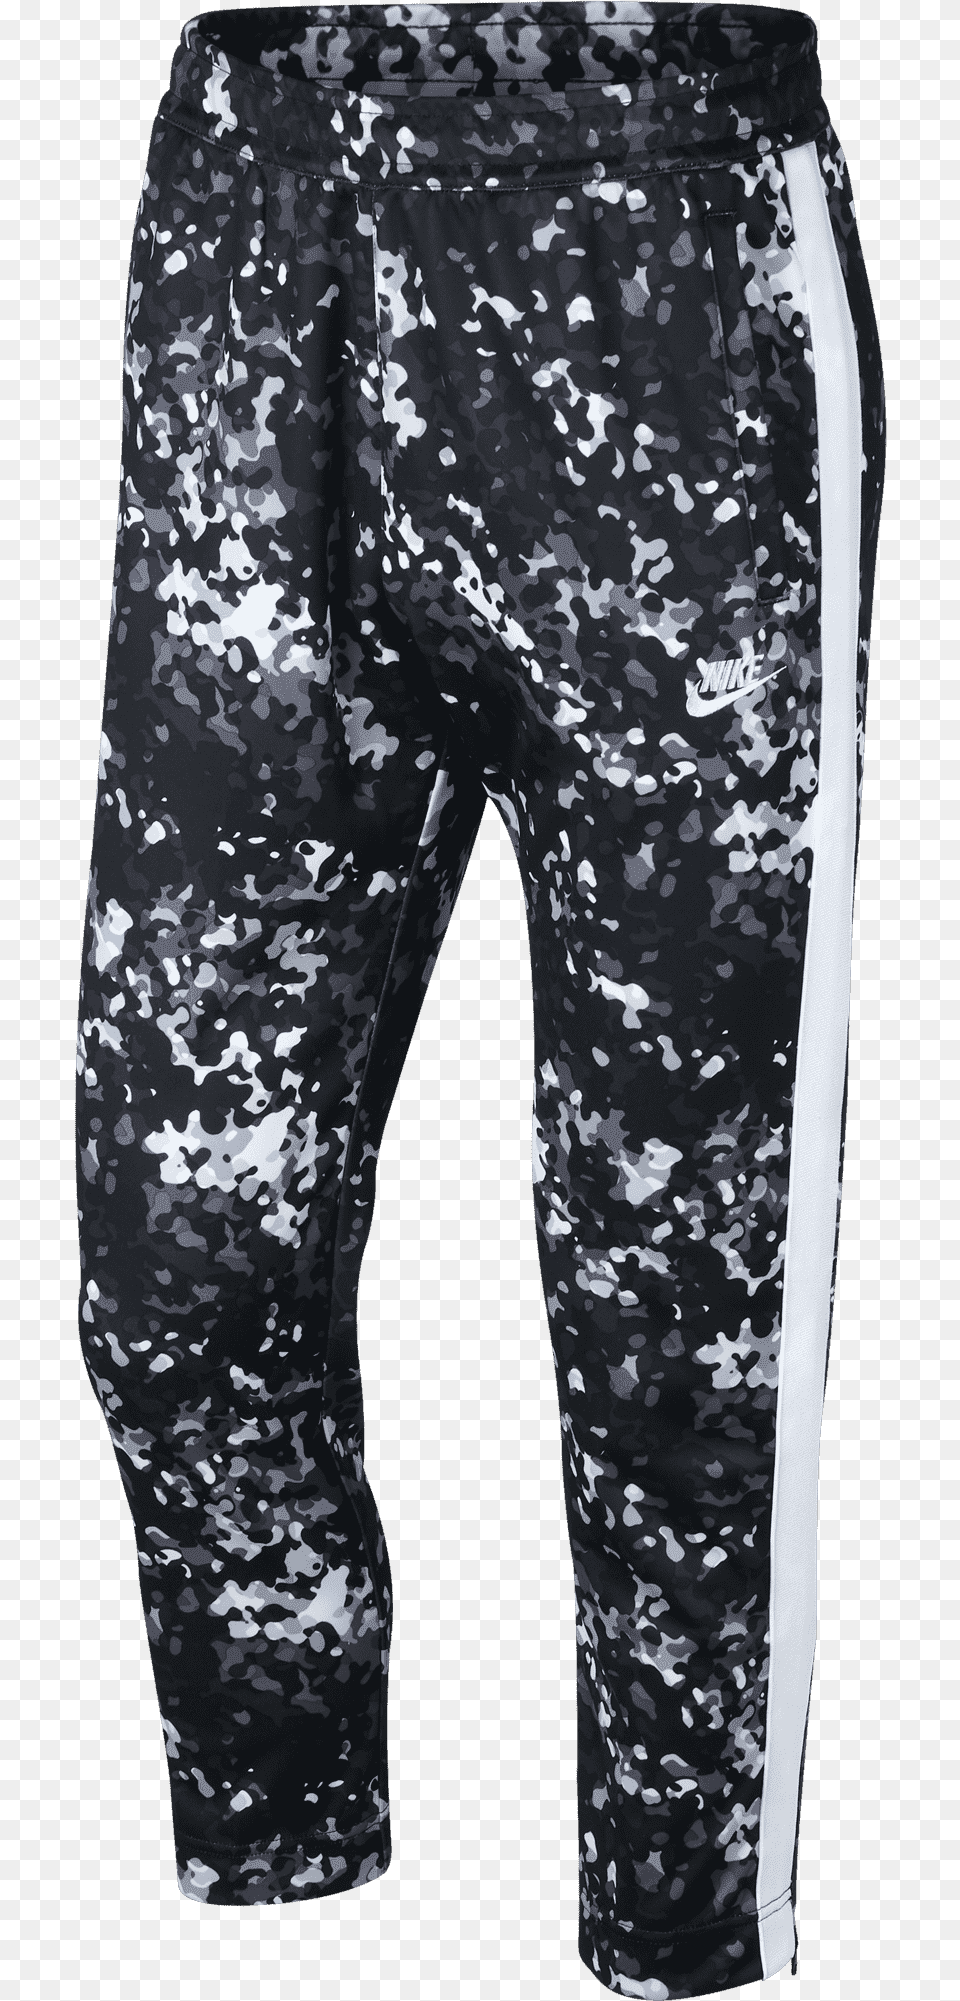 Nike Sportswear Camo Pants, Clothing, Military, Military Uniform, Adult Png